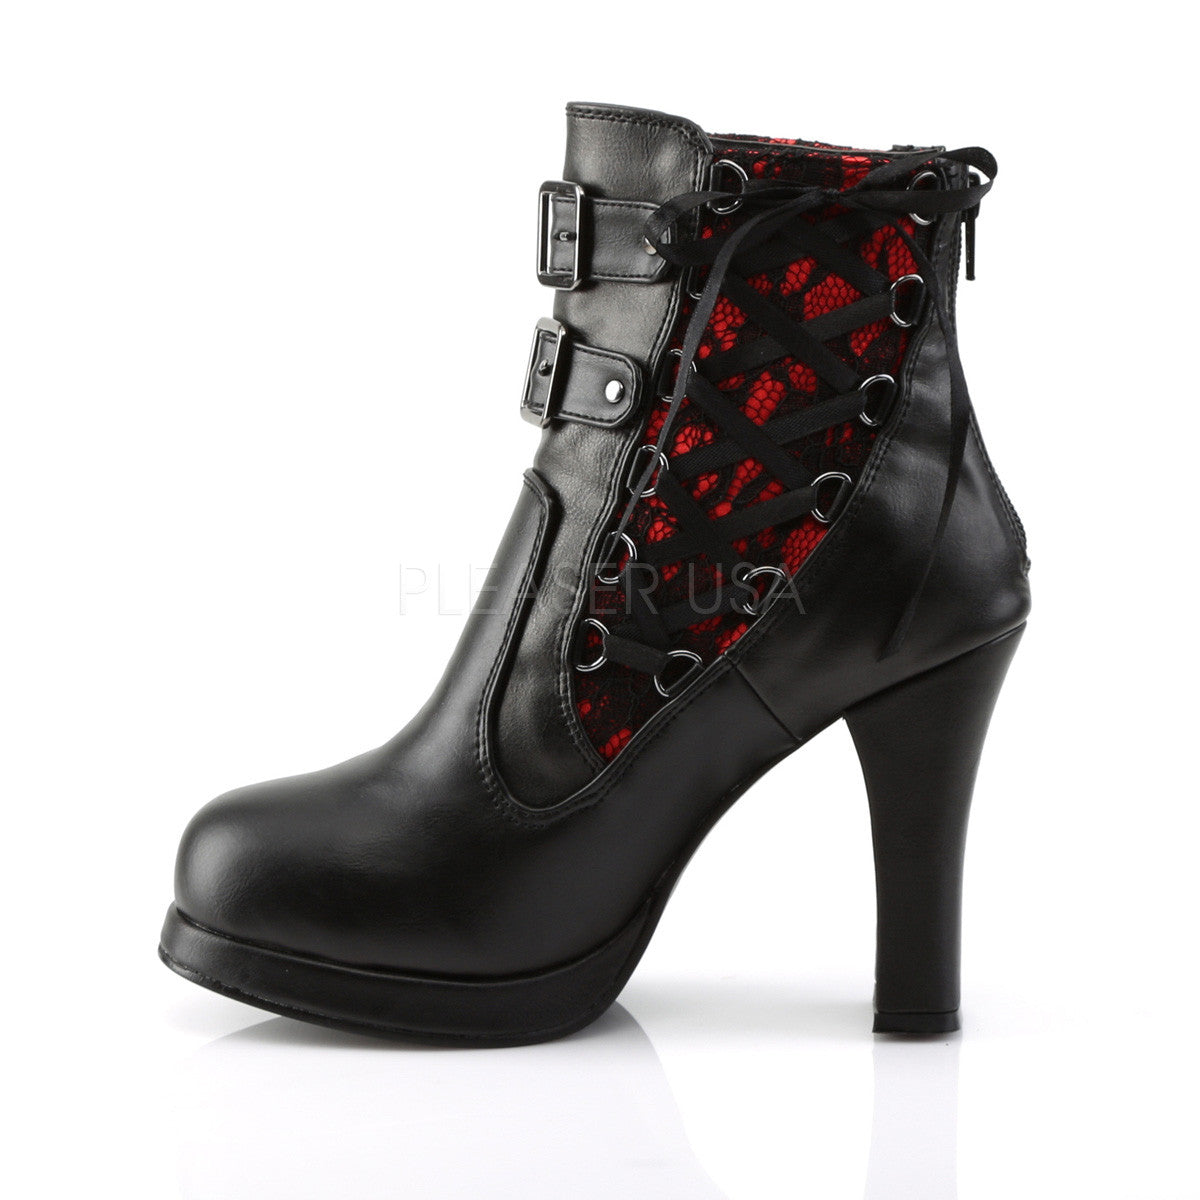 Demonia CRYPTO-51 Black Corset-Style Ankle Boots - Shoecup.com - 3